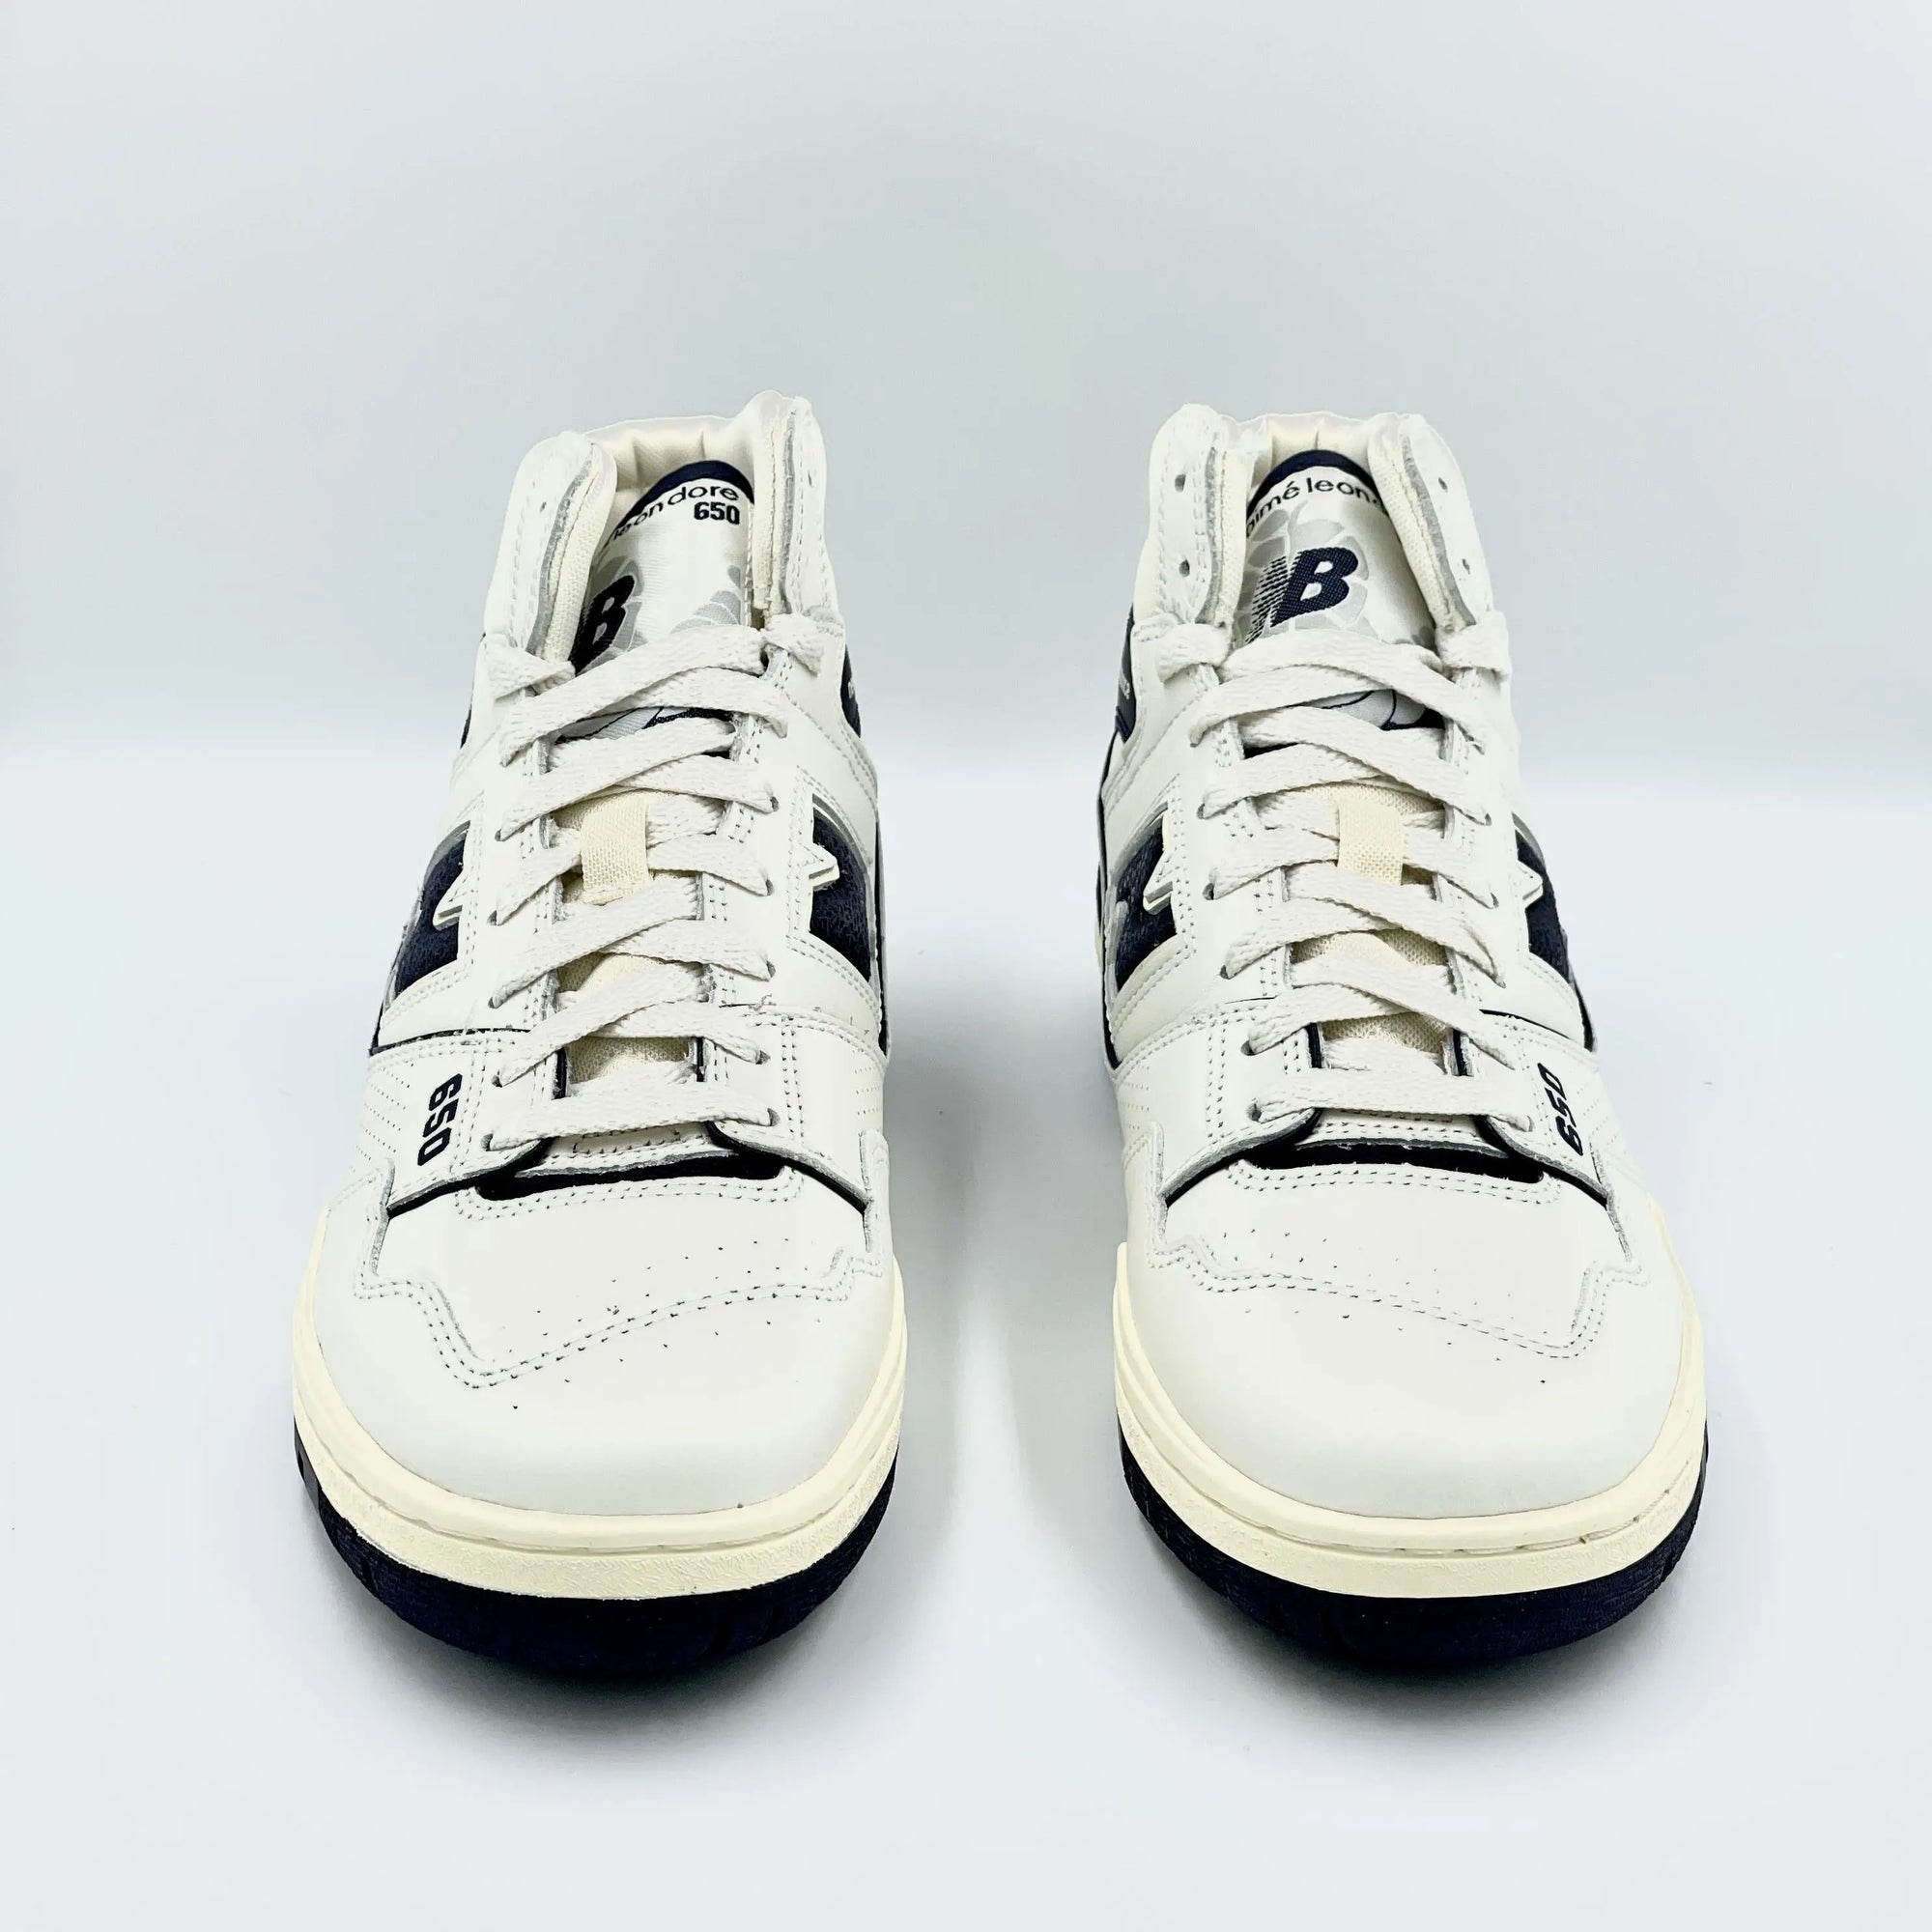 New Balance 650R Aime Leon Dore White Navy  SA Sneakers